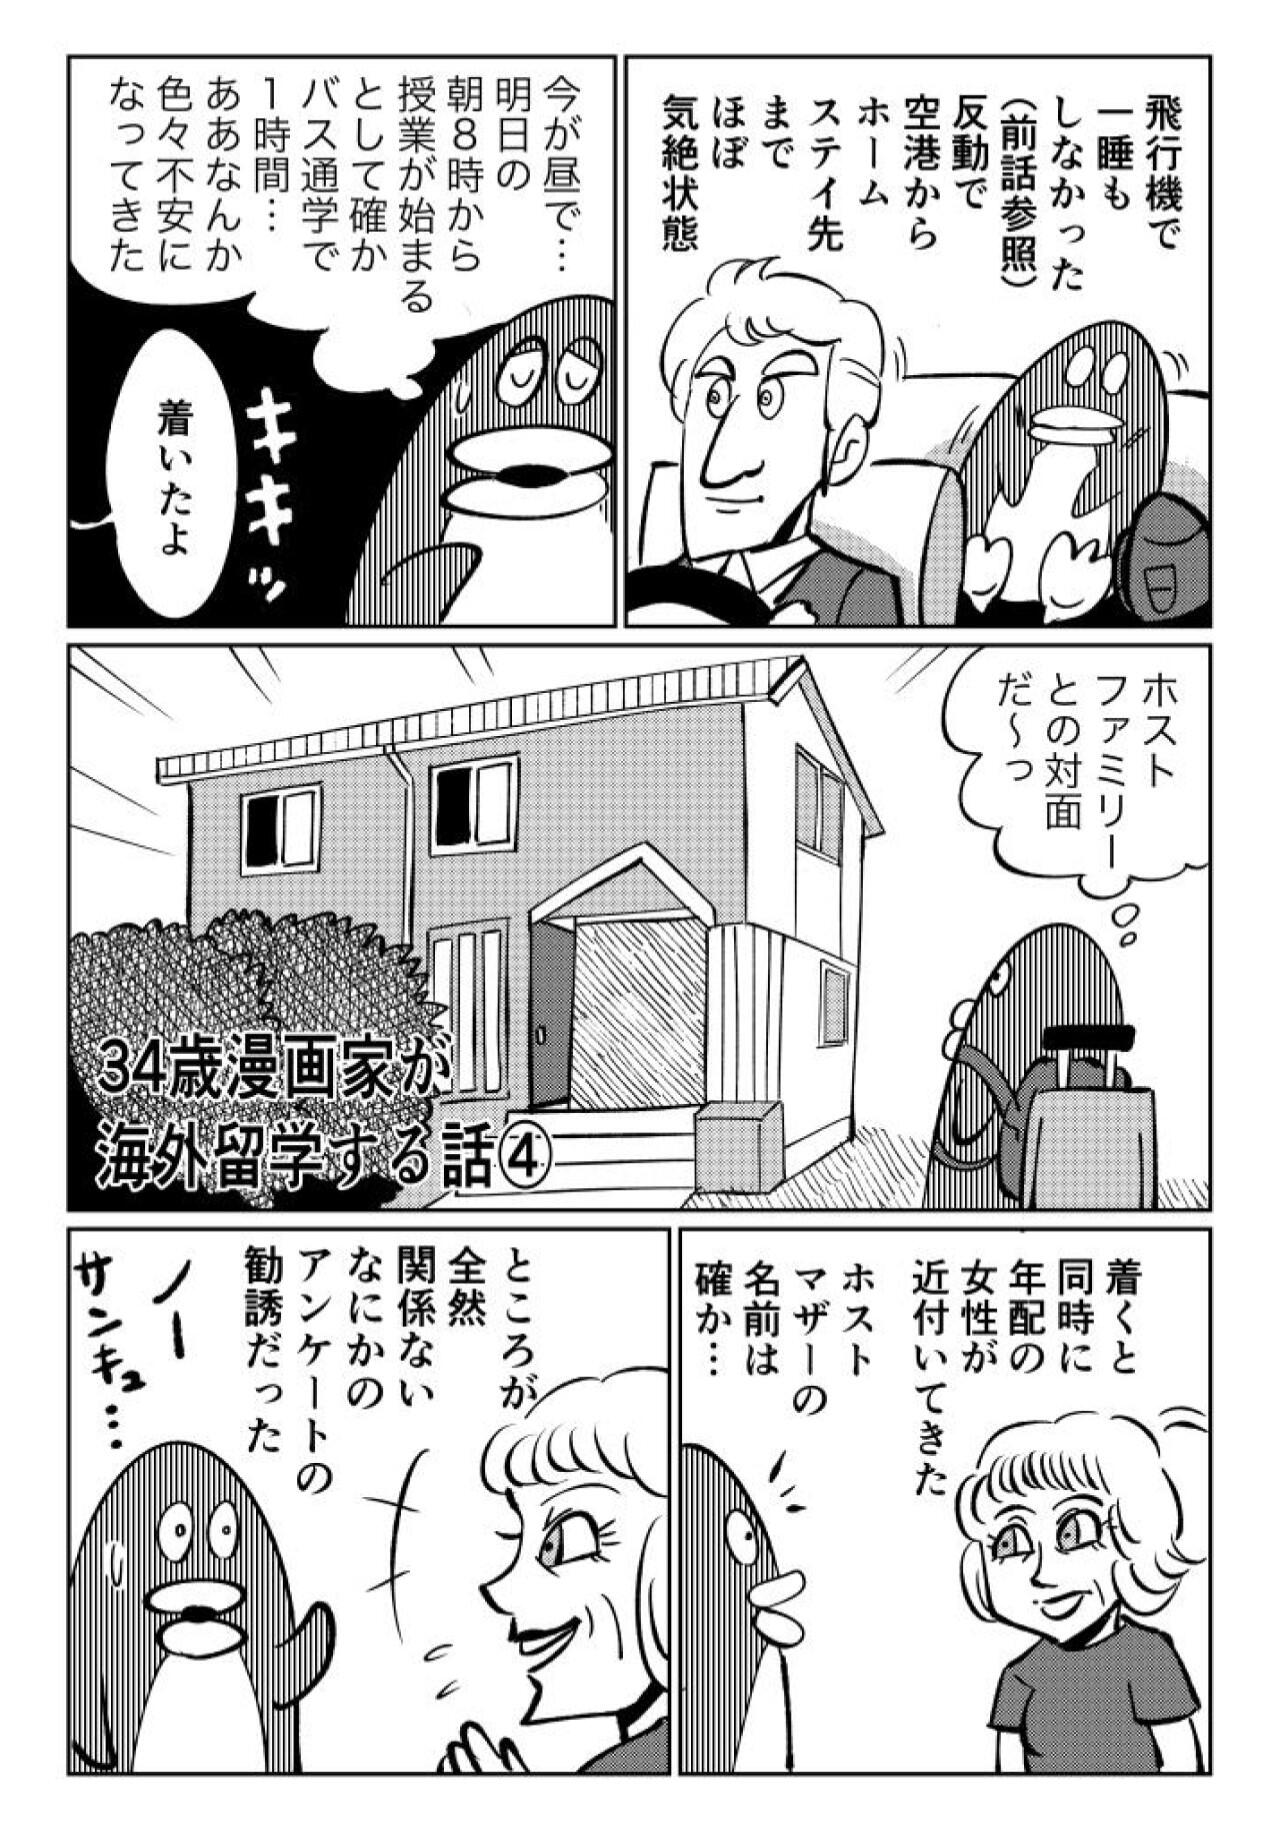 https://www.ryugaku.co.jp/column/images/34sai4_1_1280.jpg